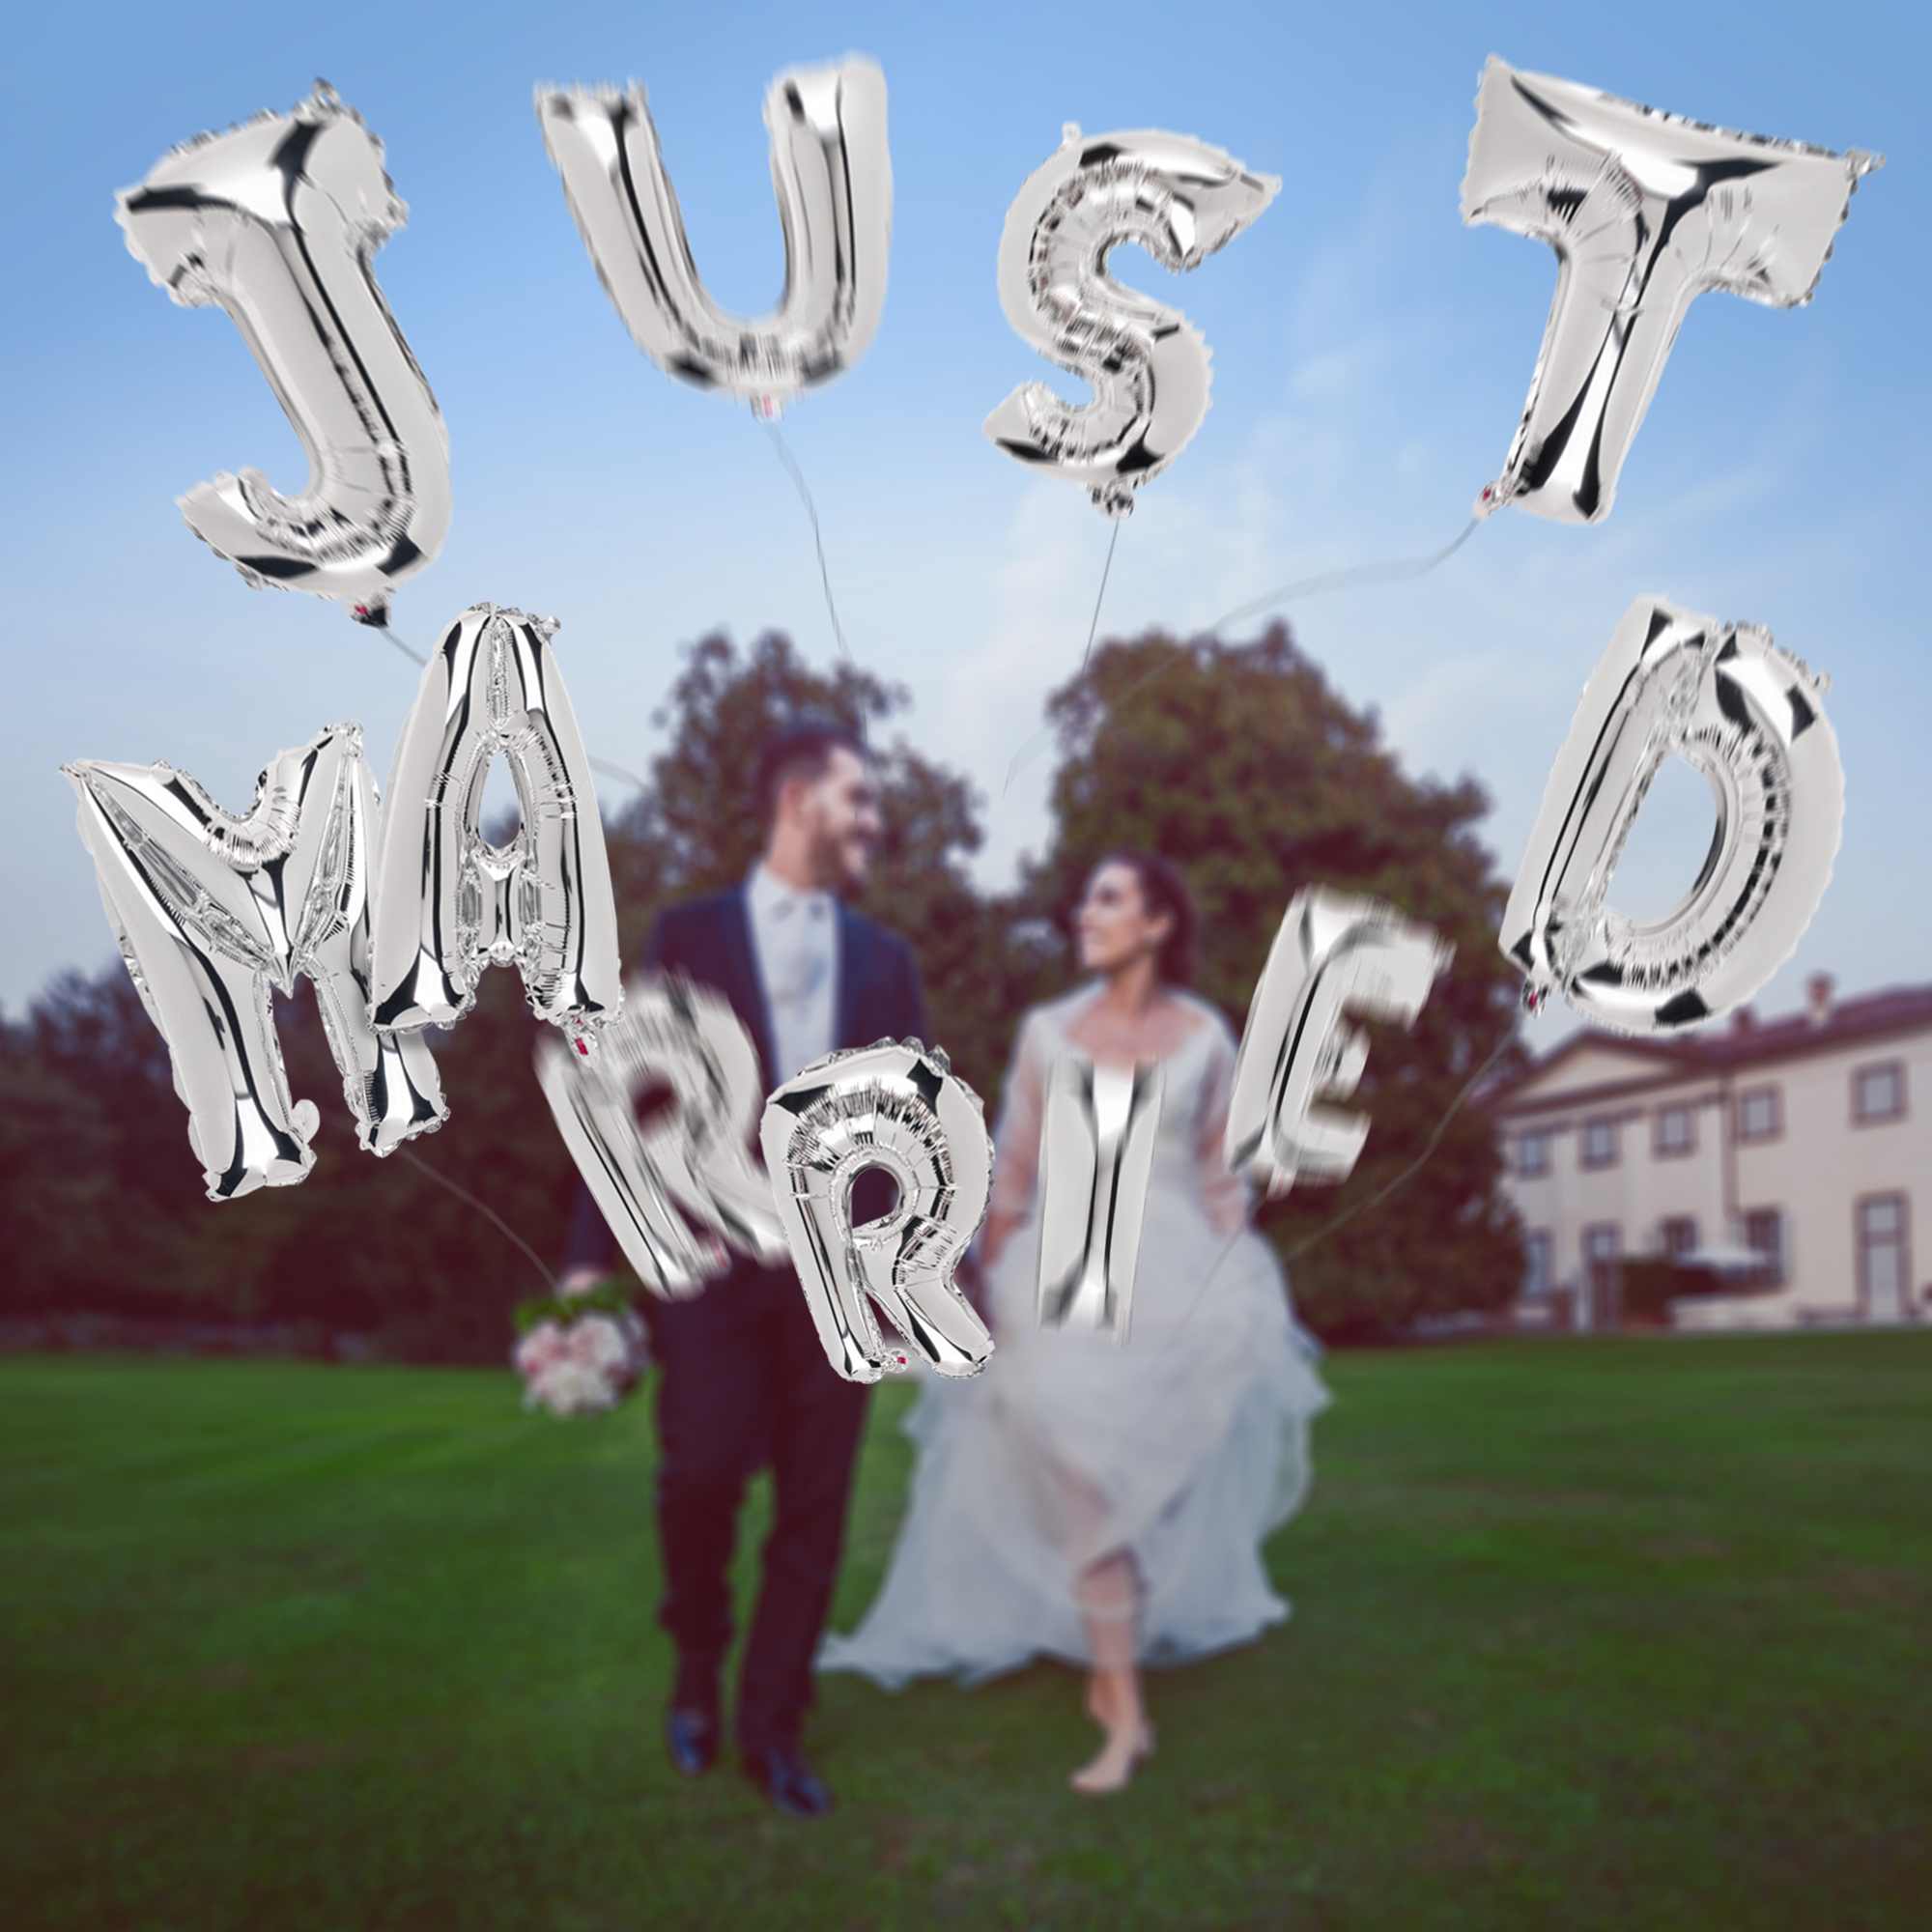 Hochzeitsballons - Just Married 3836 - 5